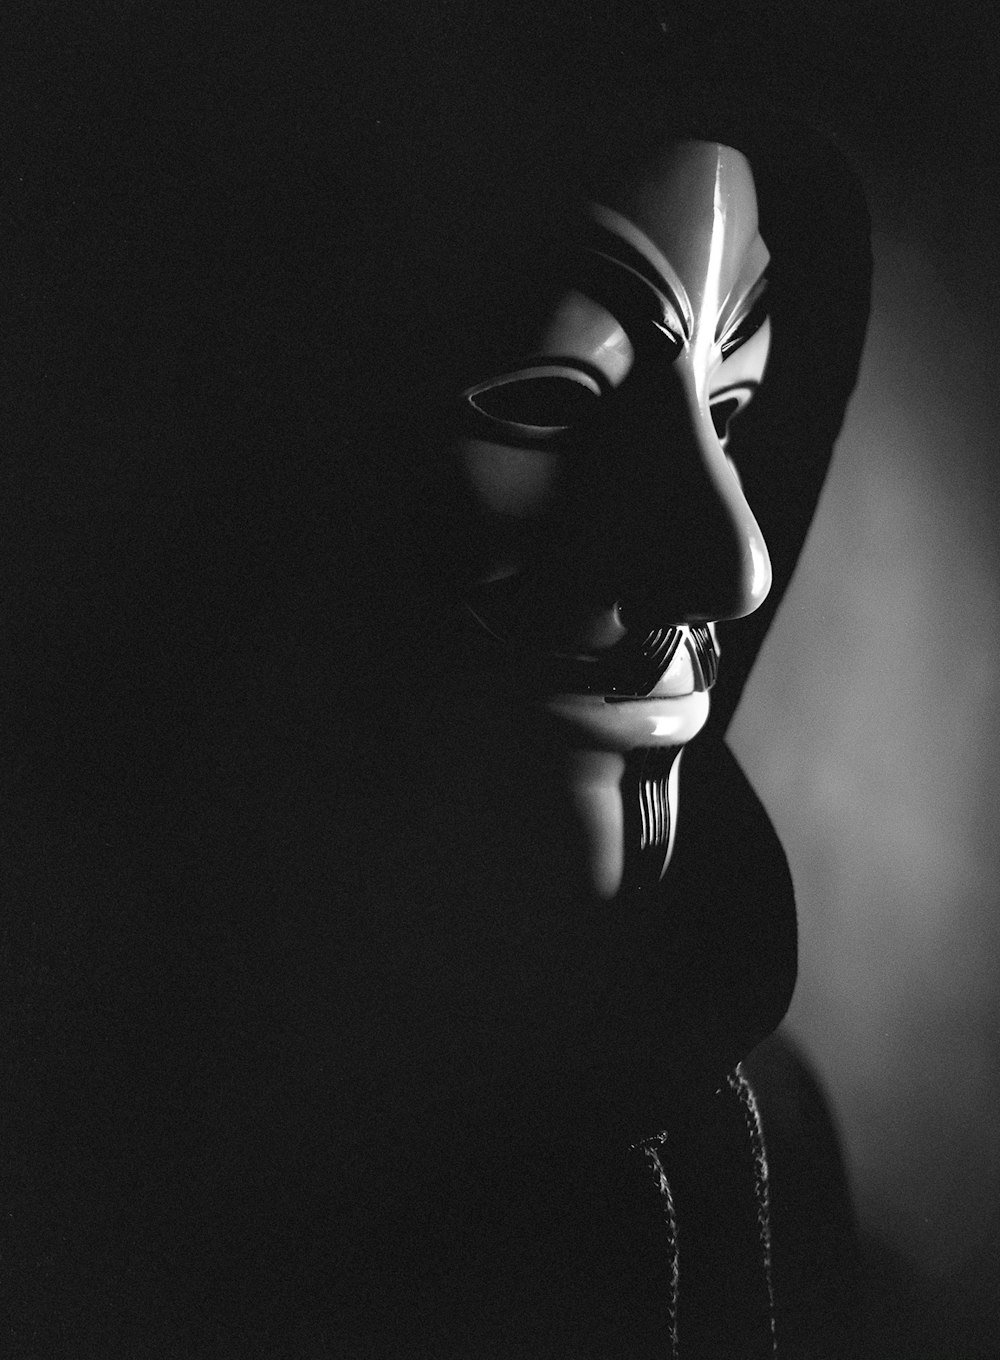 máscara facial em preto e branco